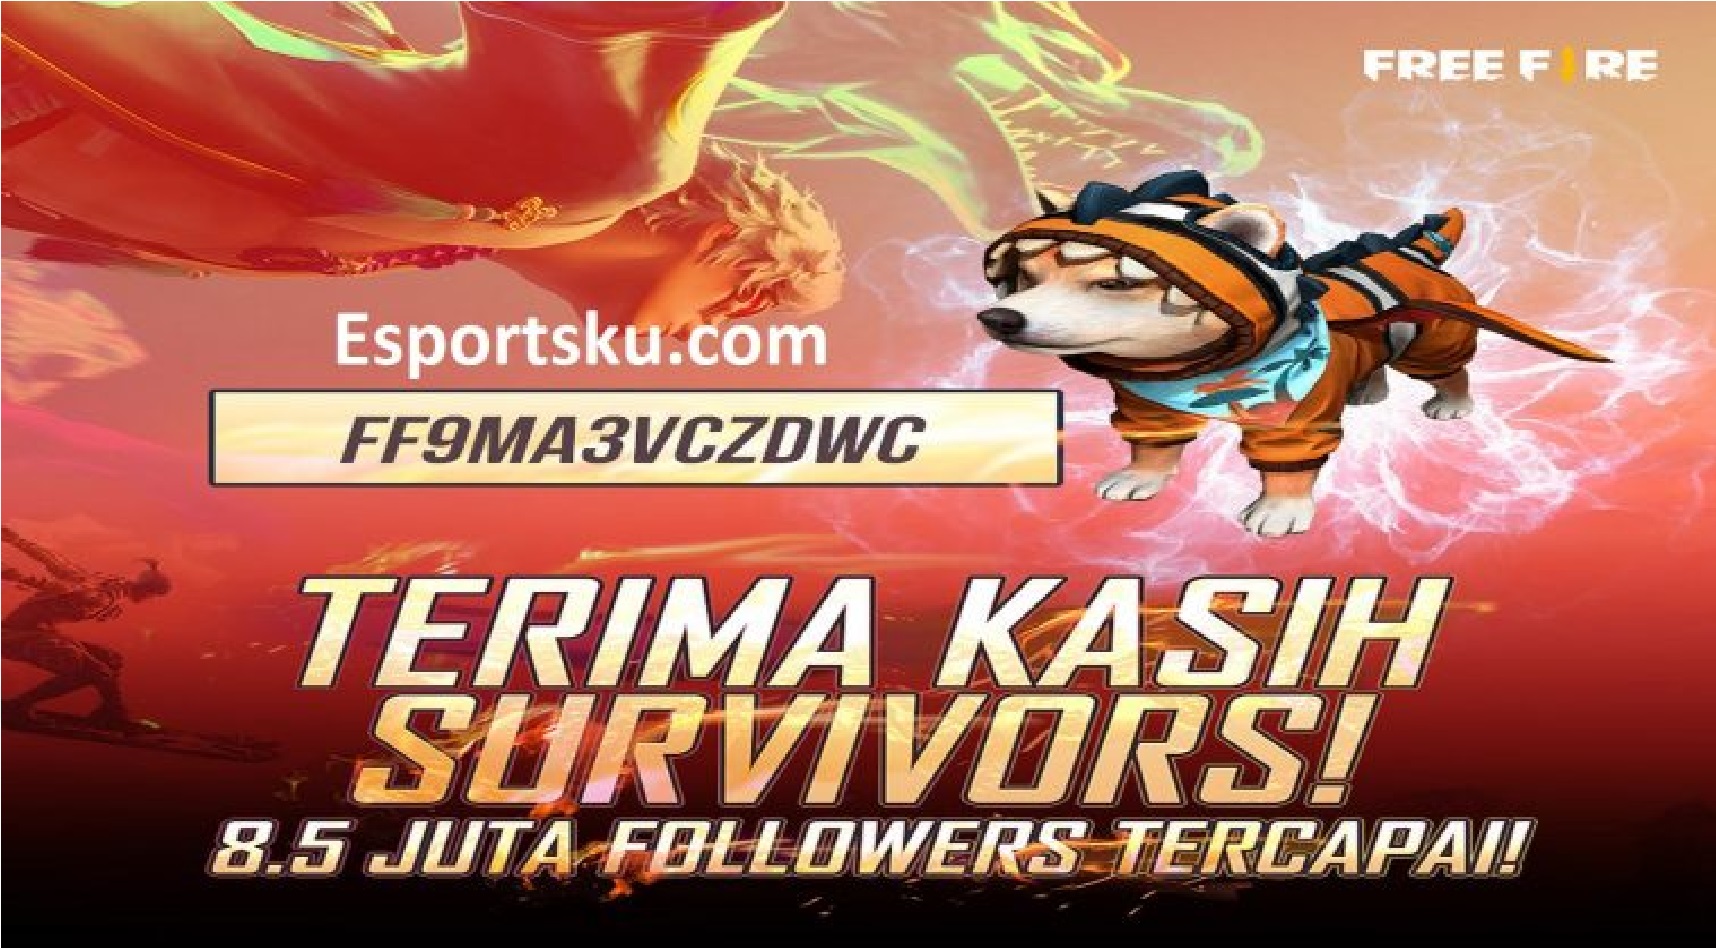 Ff9ma3vczdwc Special Redeem Code In Free Fire Ff Esports